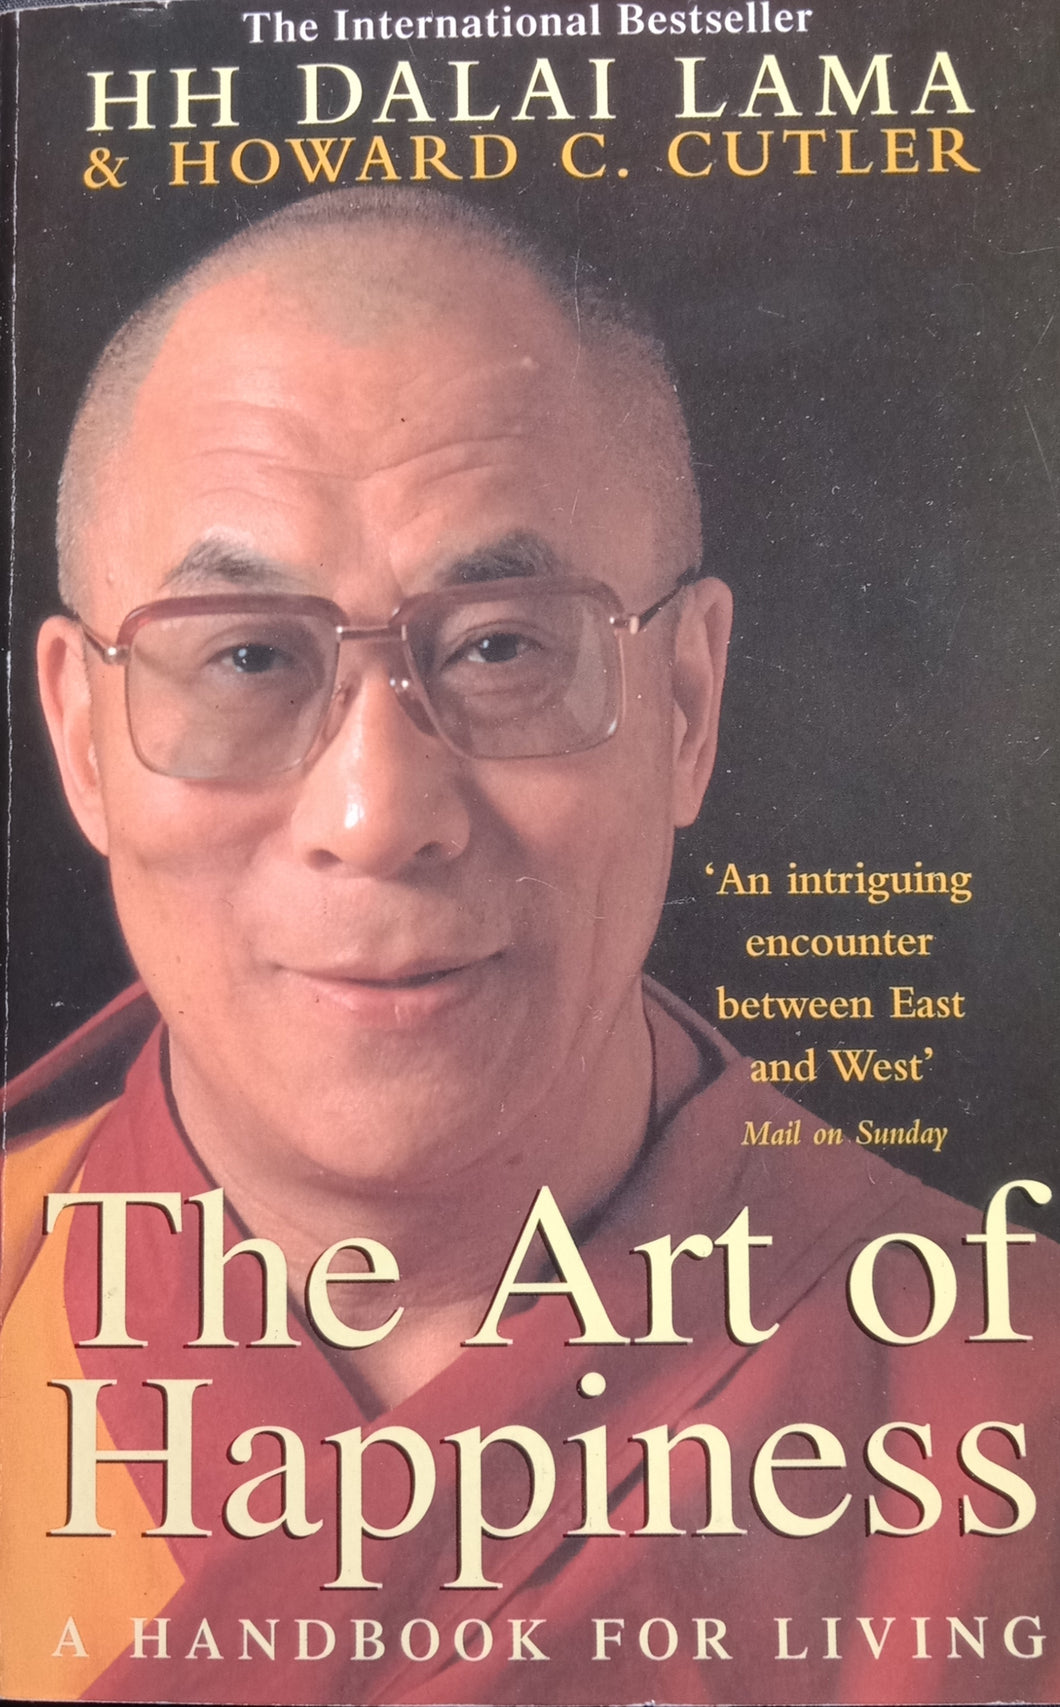 Rhe Art Of Happiness By: H H Dalai Lama & Howard C. Cutler